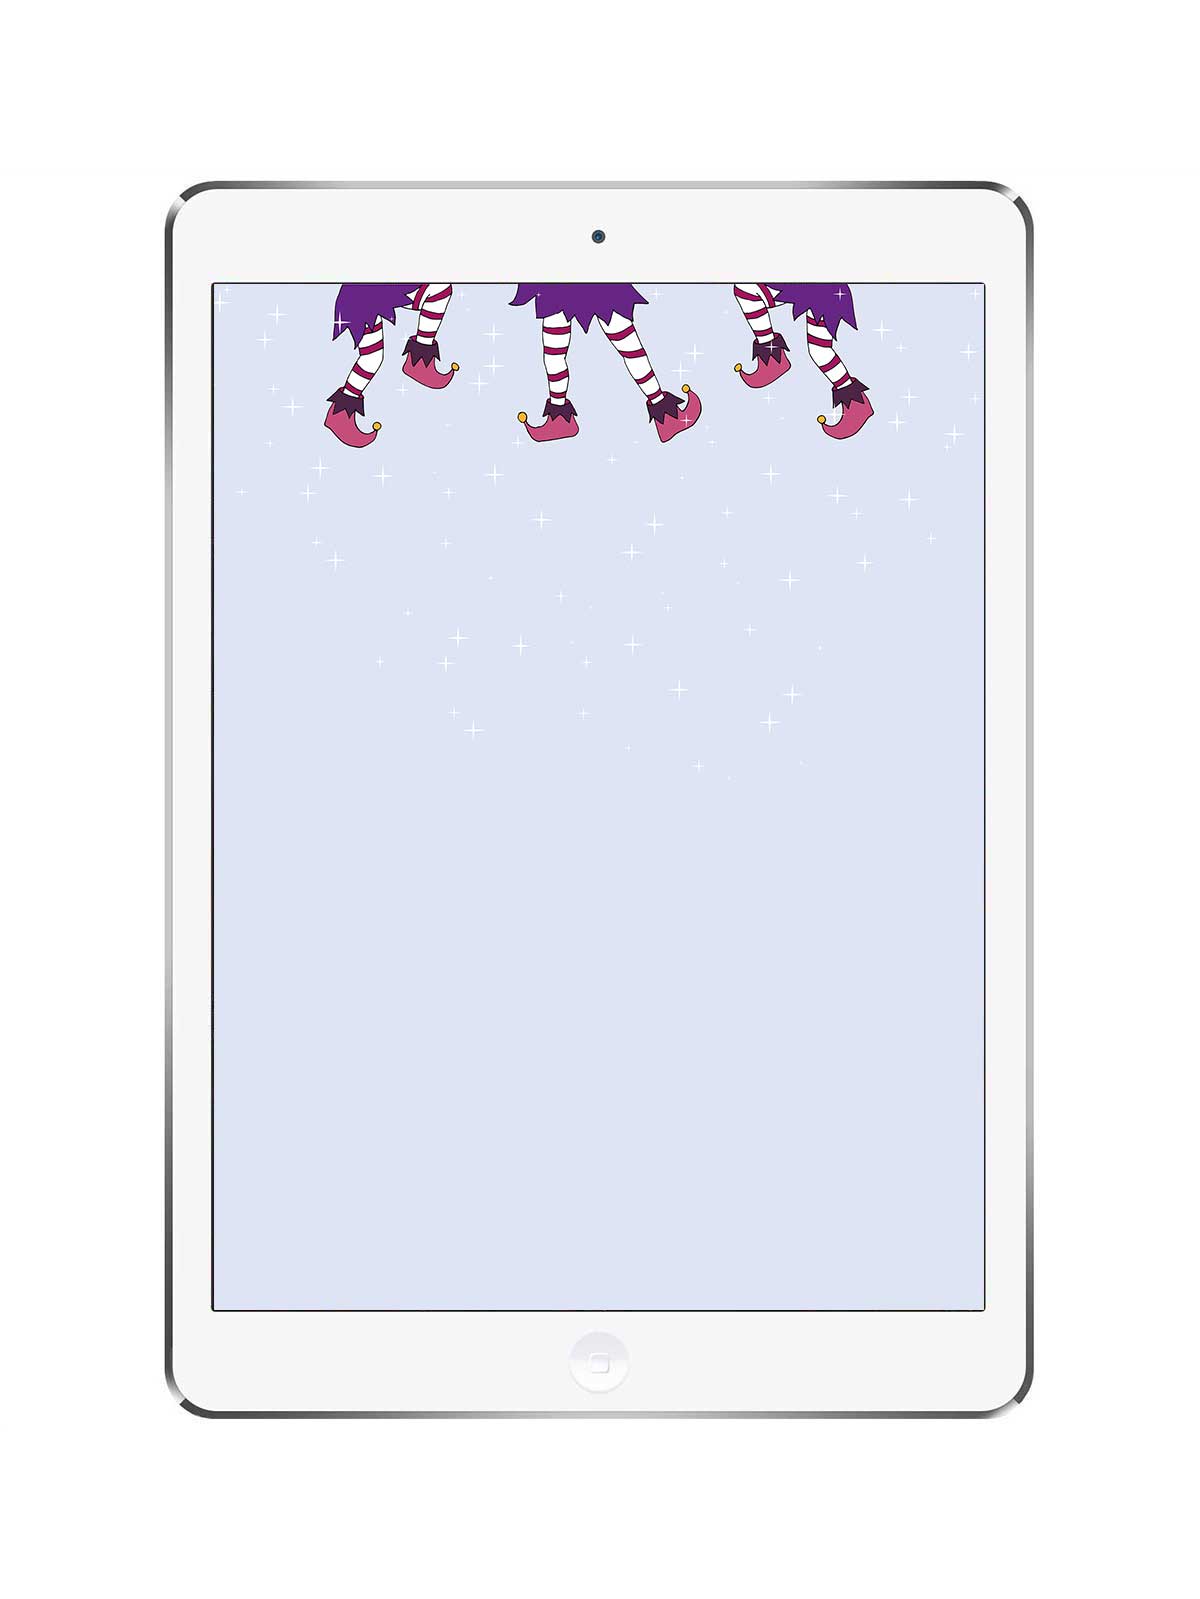 Elf desktop wallpaper - free download for Christmas!